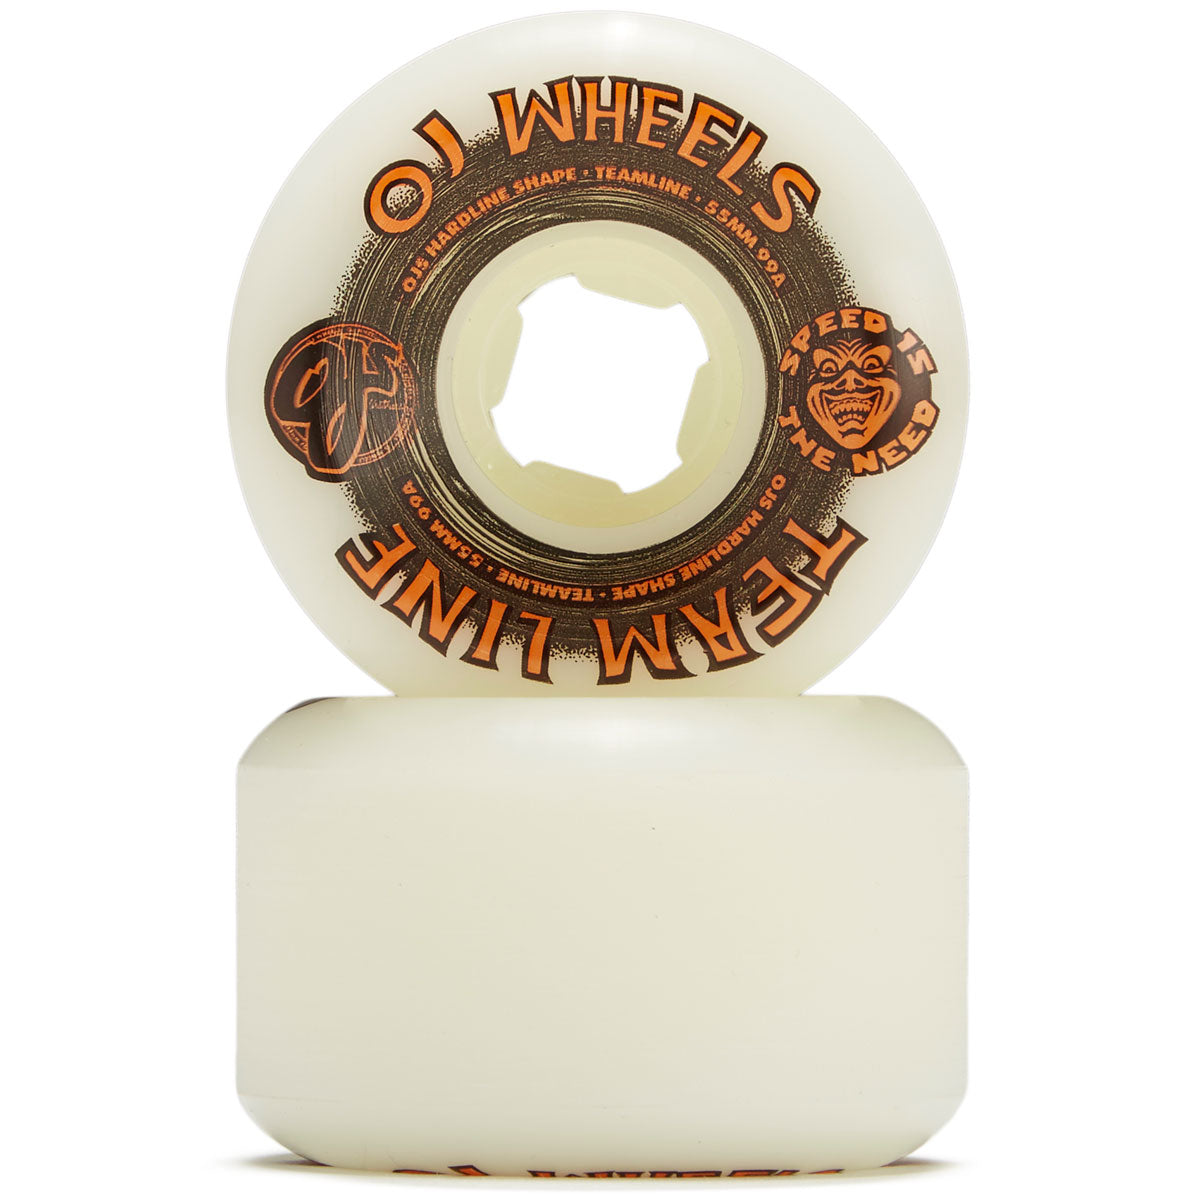 OJ Team Line Original Hardline 99a Skateboard Wheels - White/Black/Orange - 55mm image 2